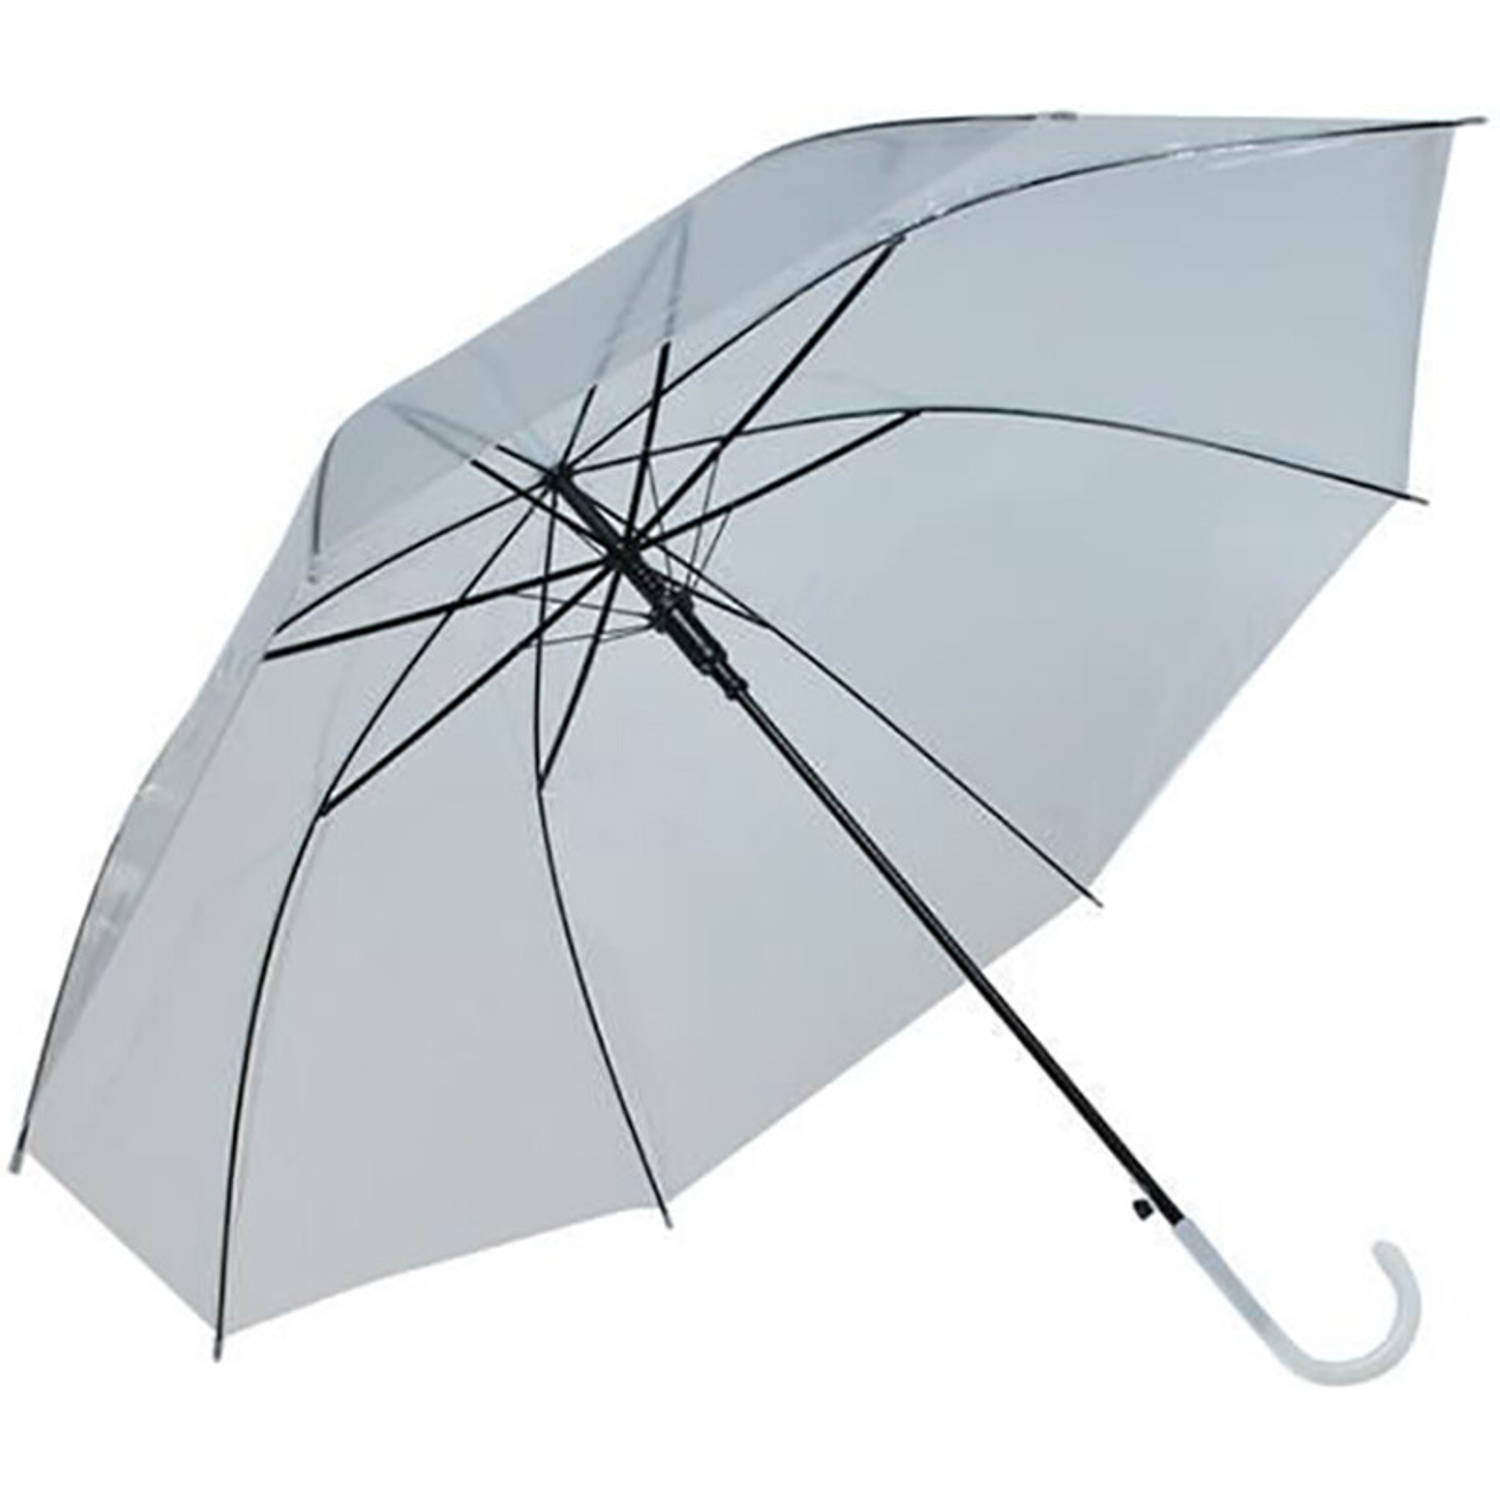 Let op Geaccepteerd Carrière Paraplu - Aptoza Plu - Opvouwbaar - Transparant Wit - Doorzichtige Paraplu  - Ø107cm | Blokker